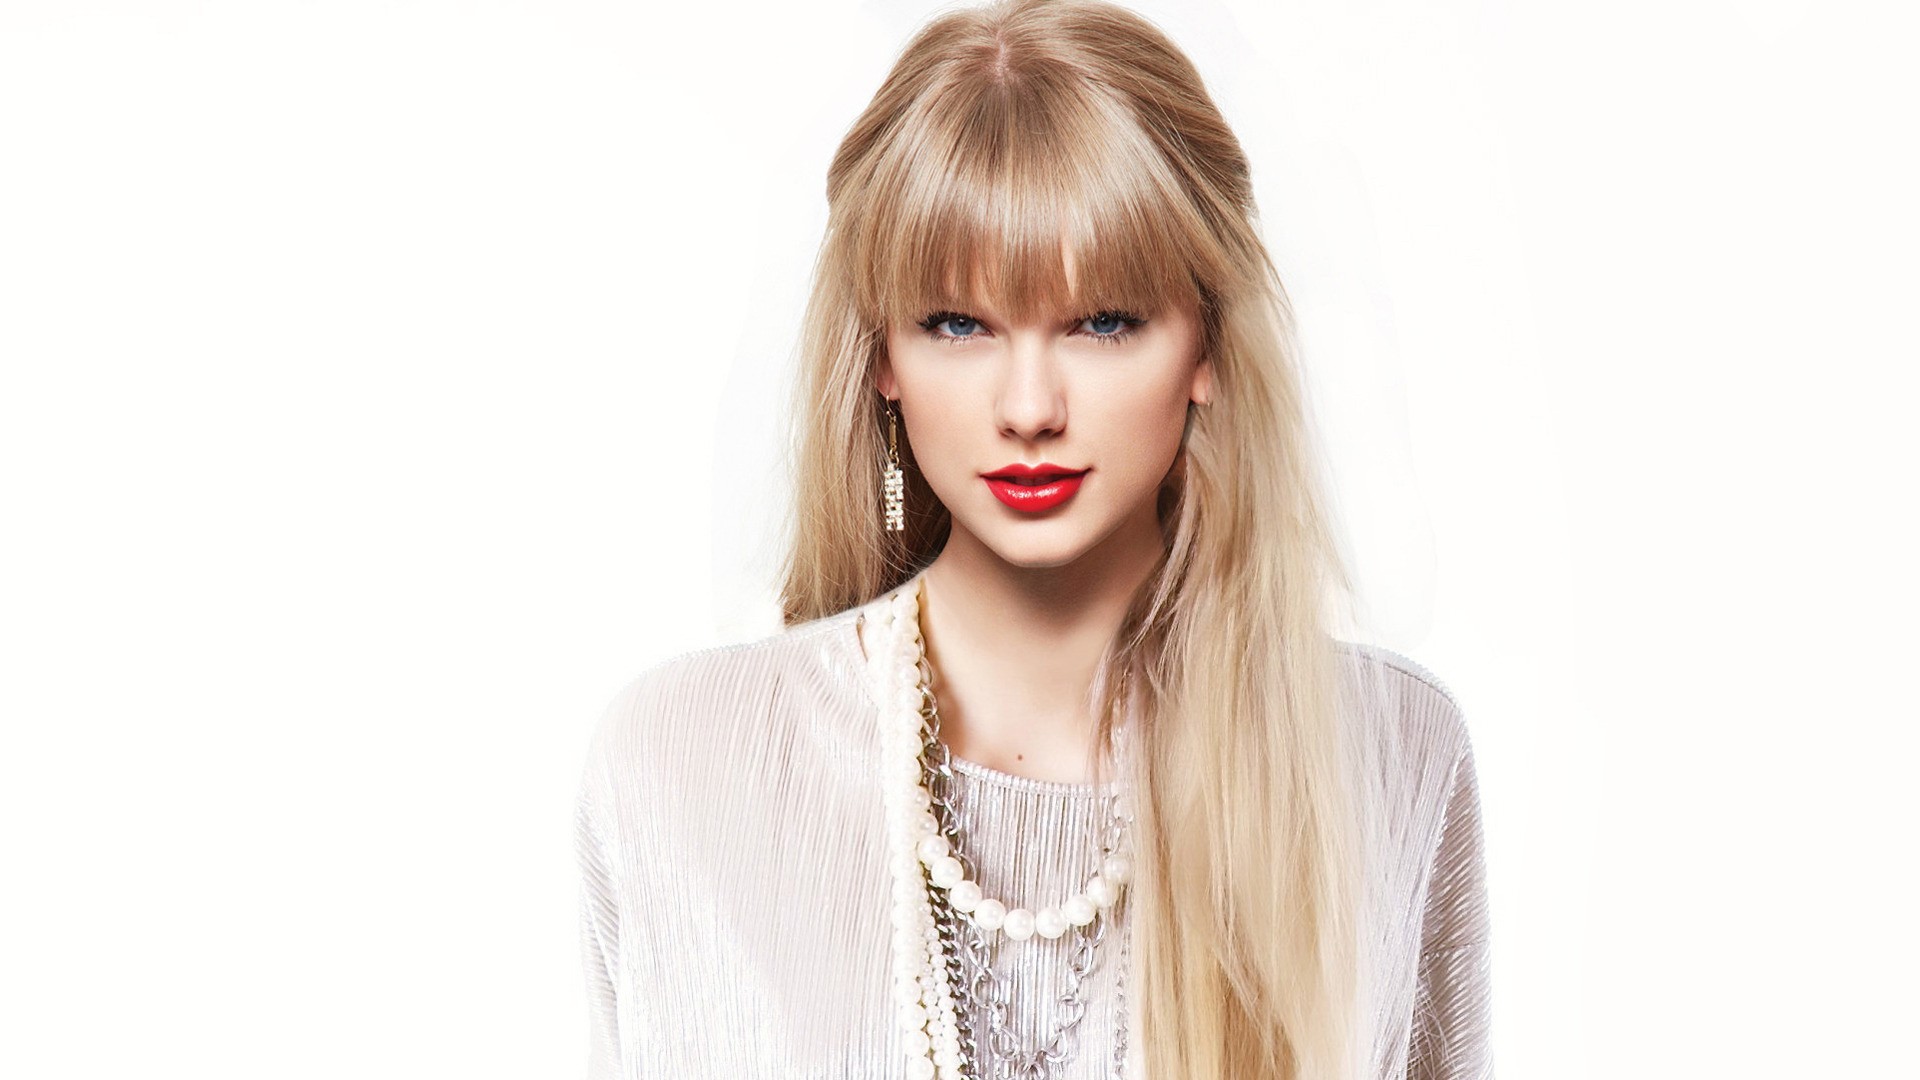 Taylor Swift Wallpaper New HD Image Of